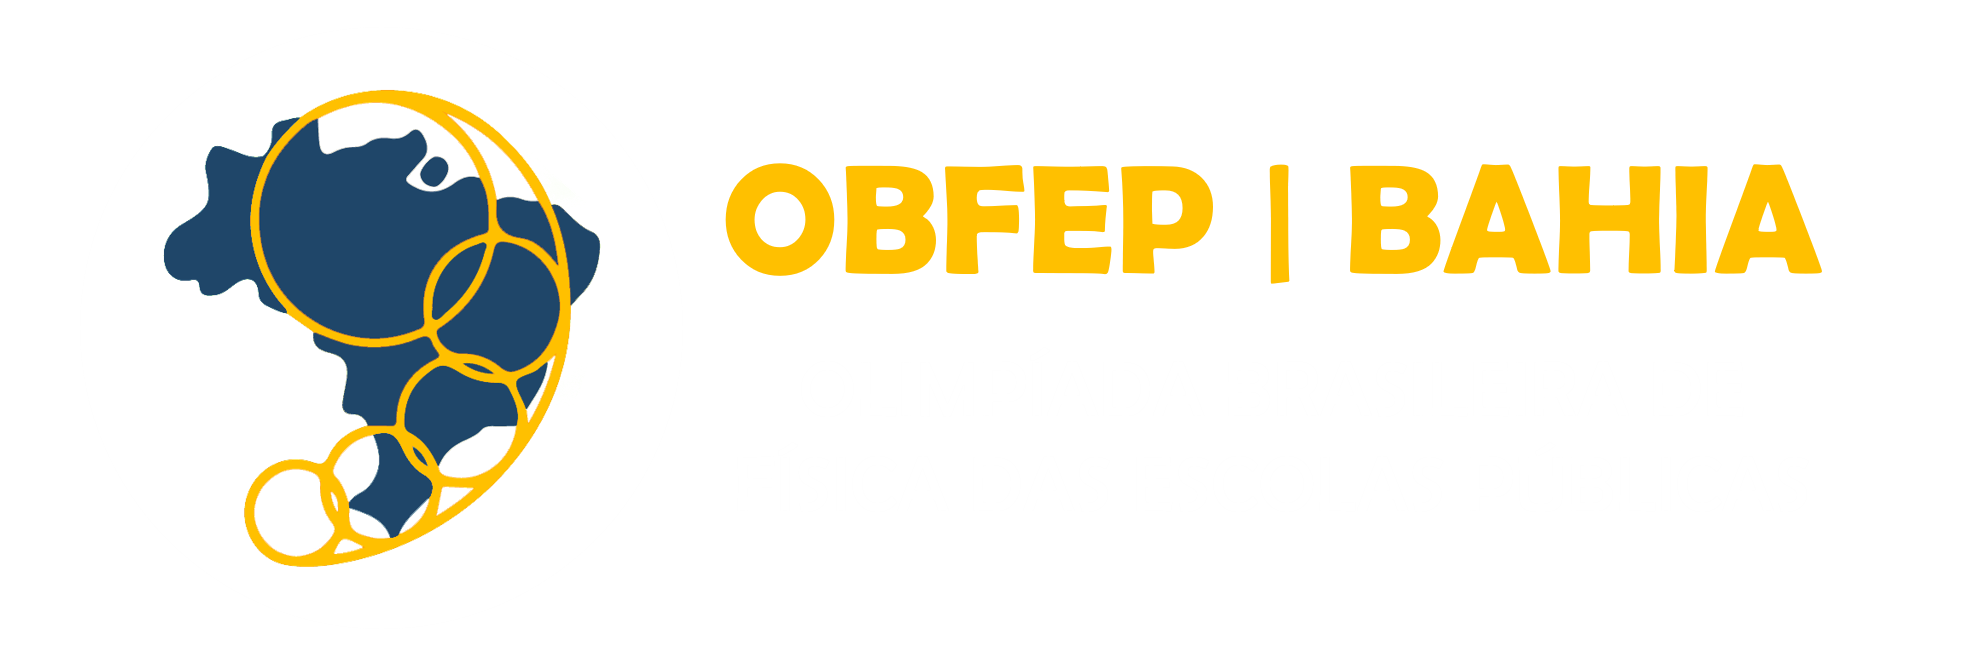 OBFEP | Bahia